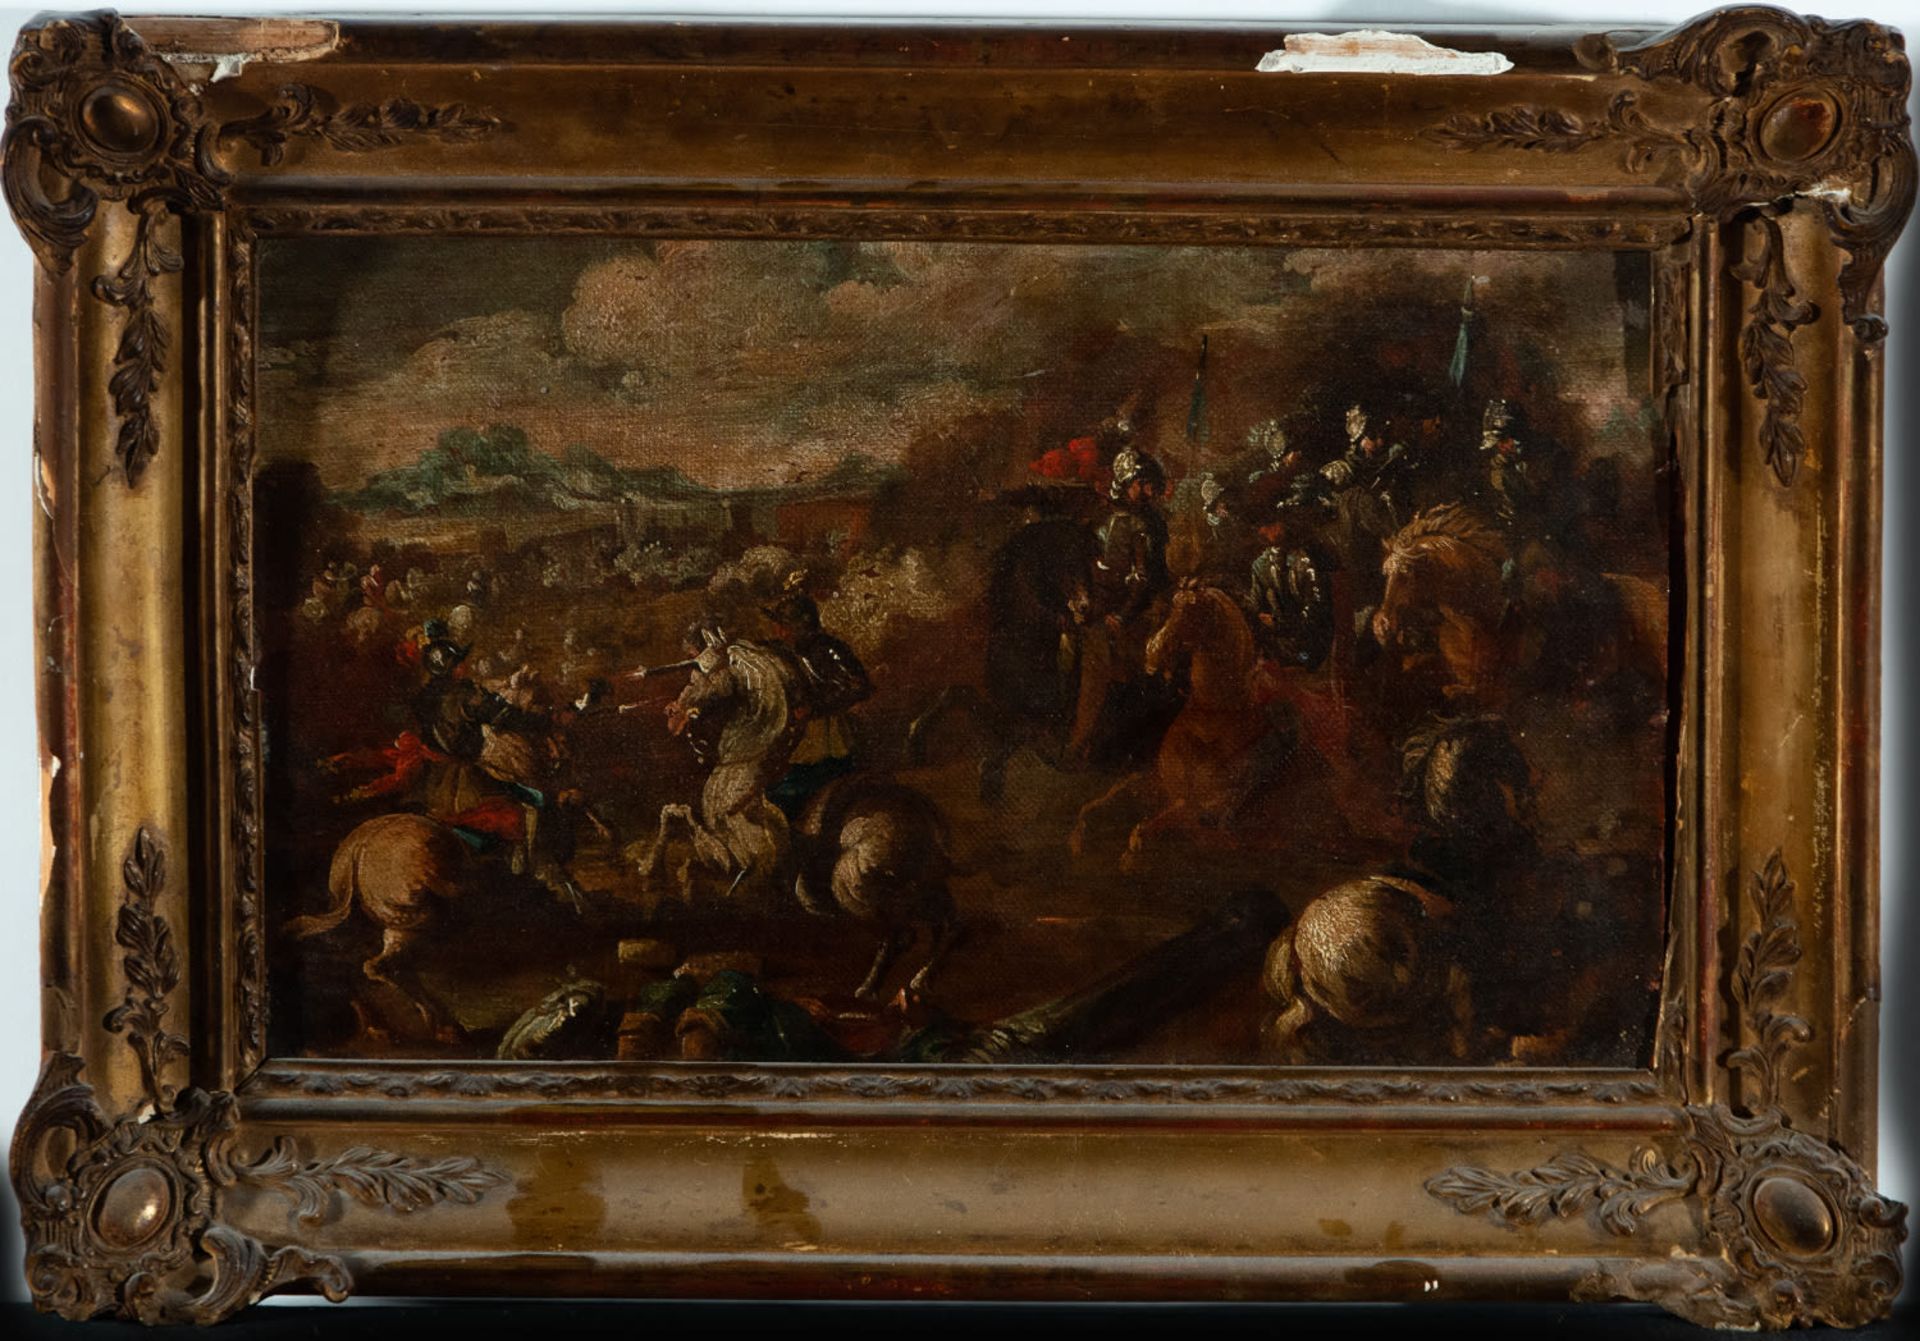 Cavalry Charge, Battle scene, Italian or Austrian school, 18th century - Image 2 of 4